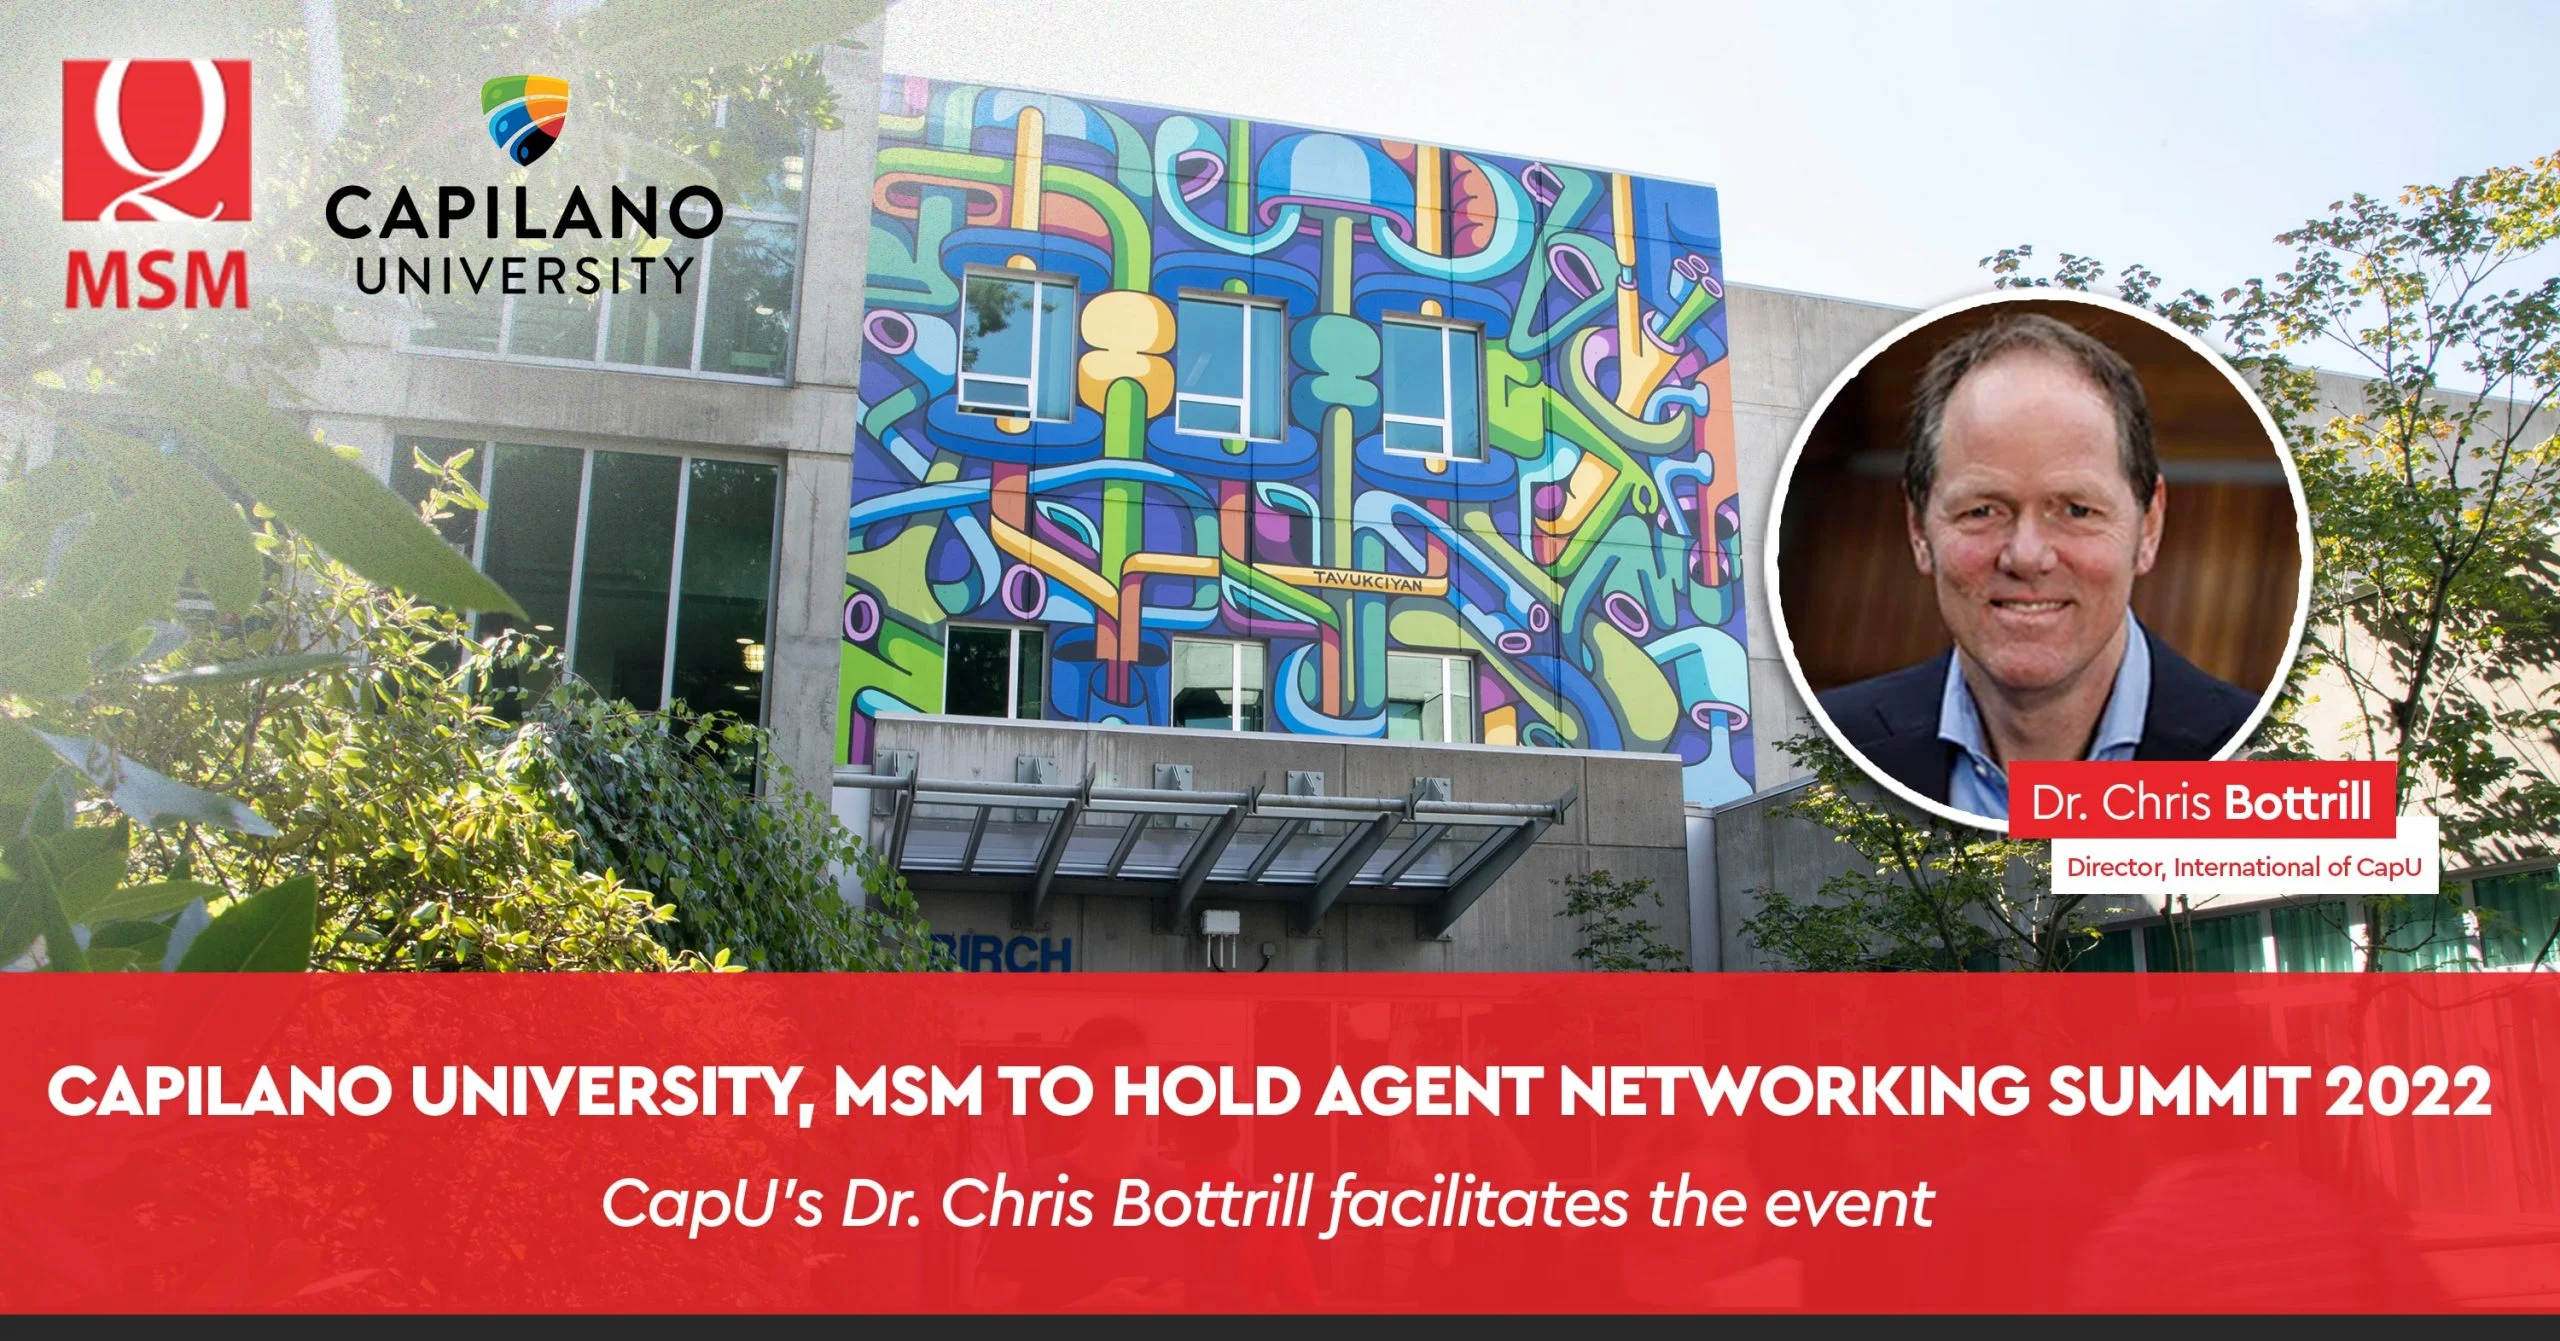 Capilano University, MSM to hold Agent Networking Summit 2022